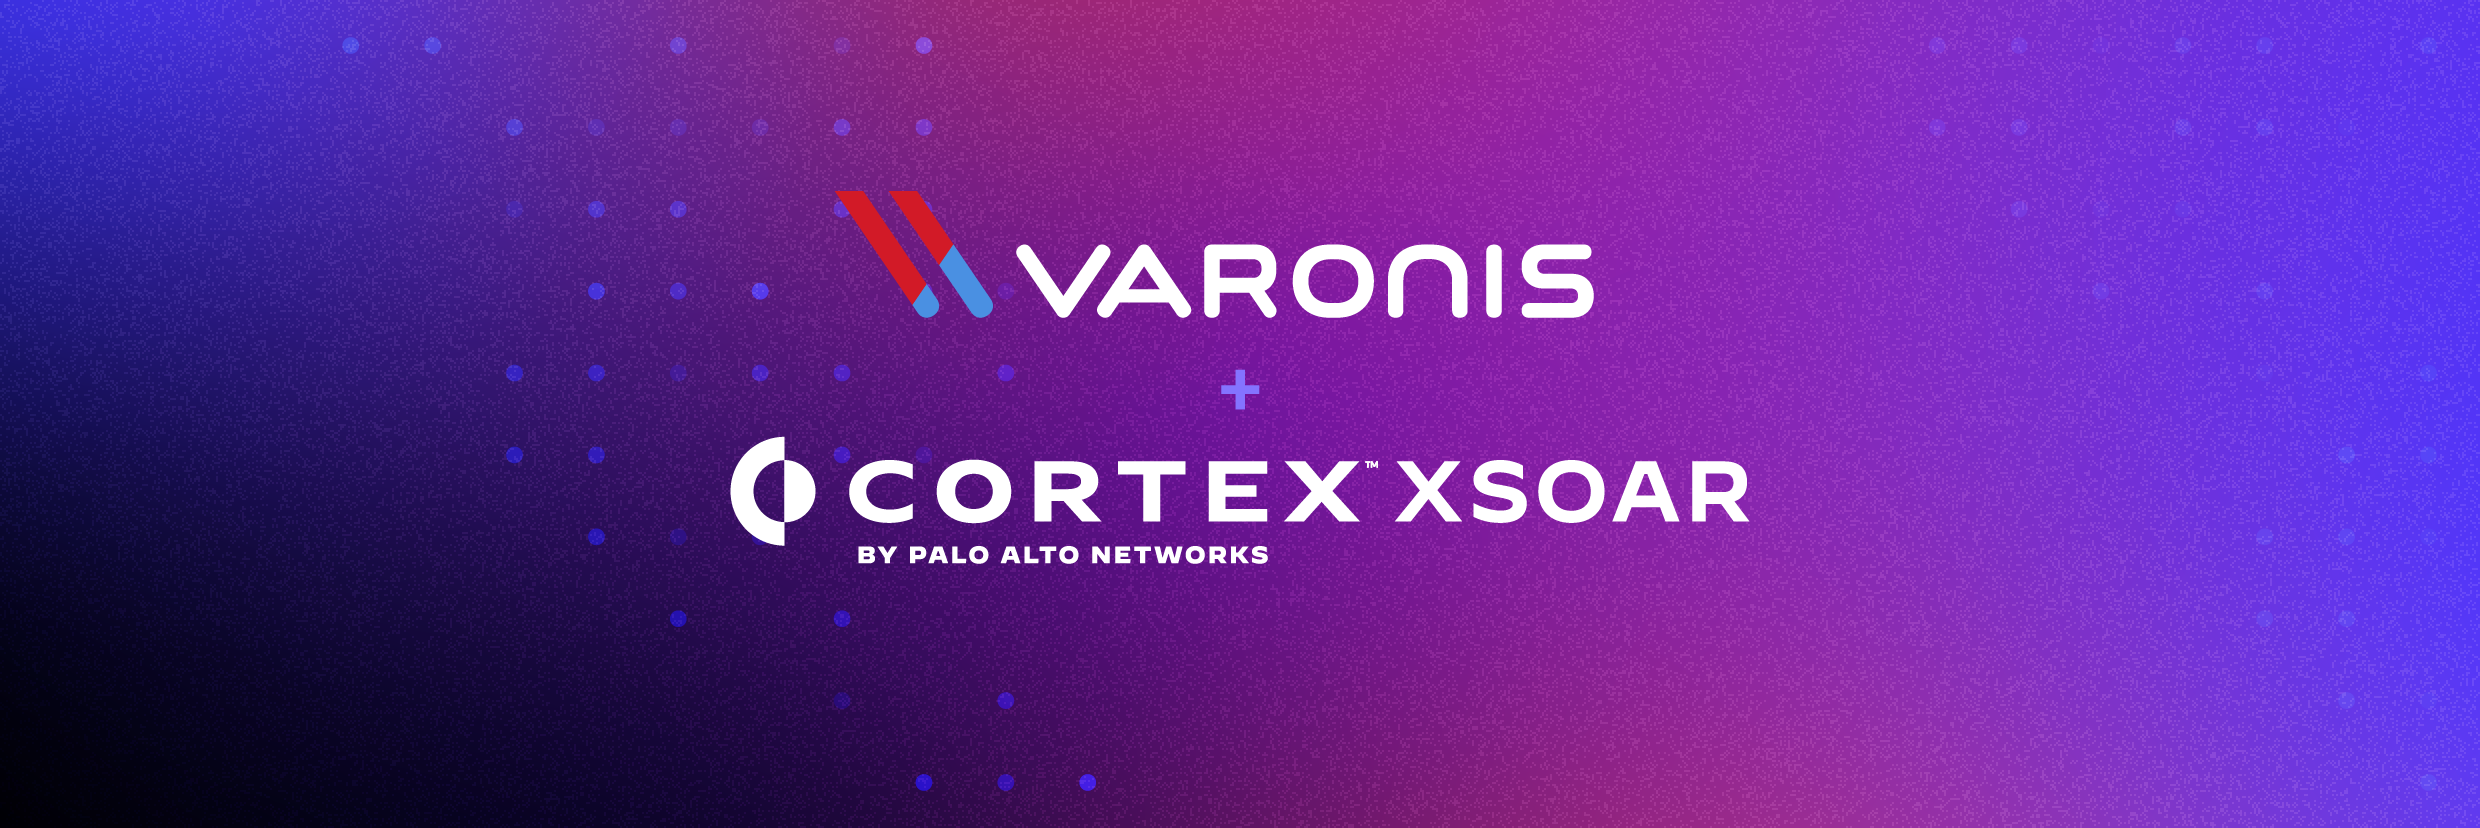 Varonis et Cortex XSOAR